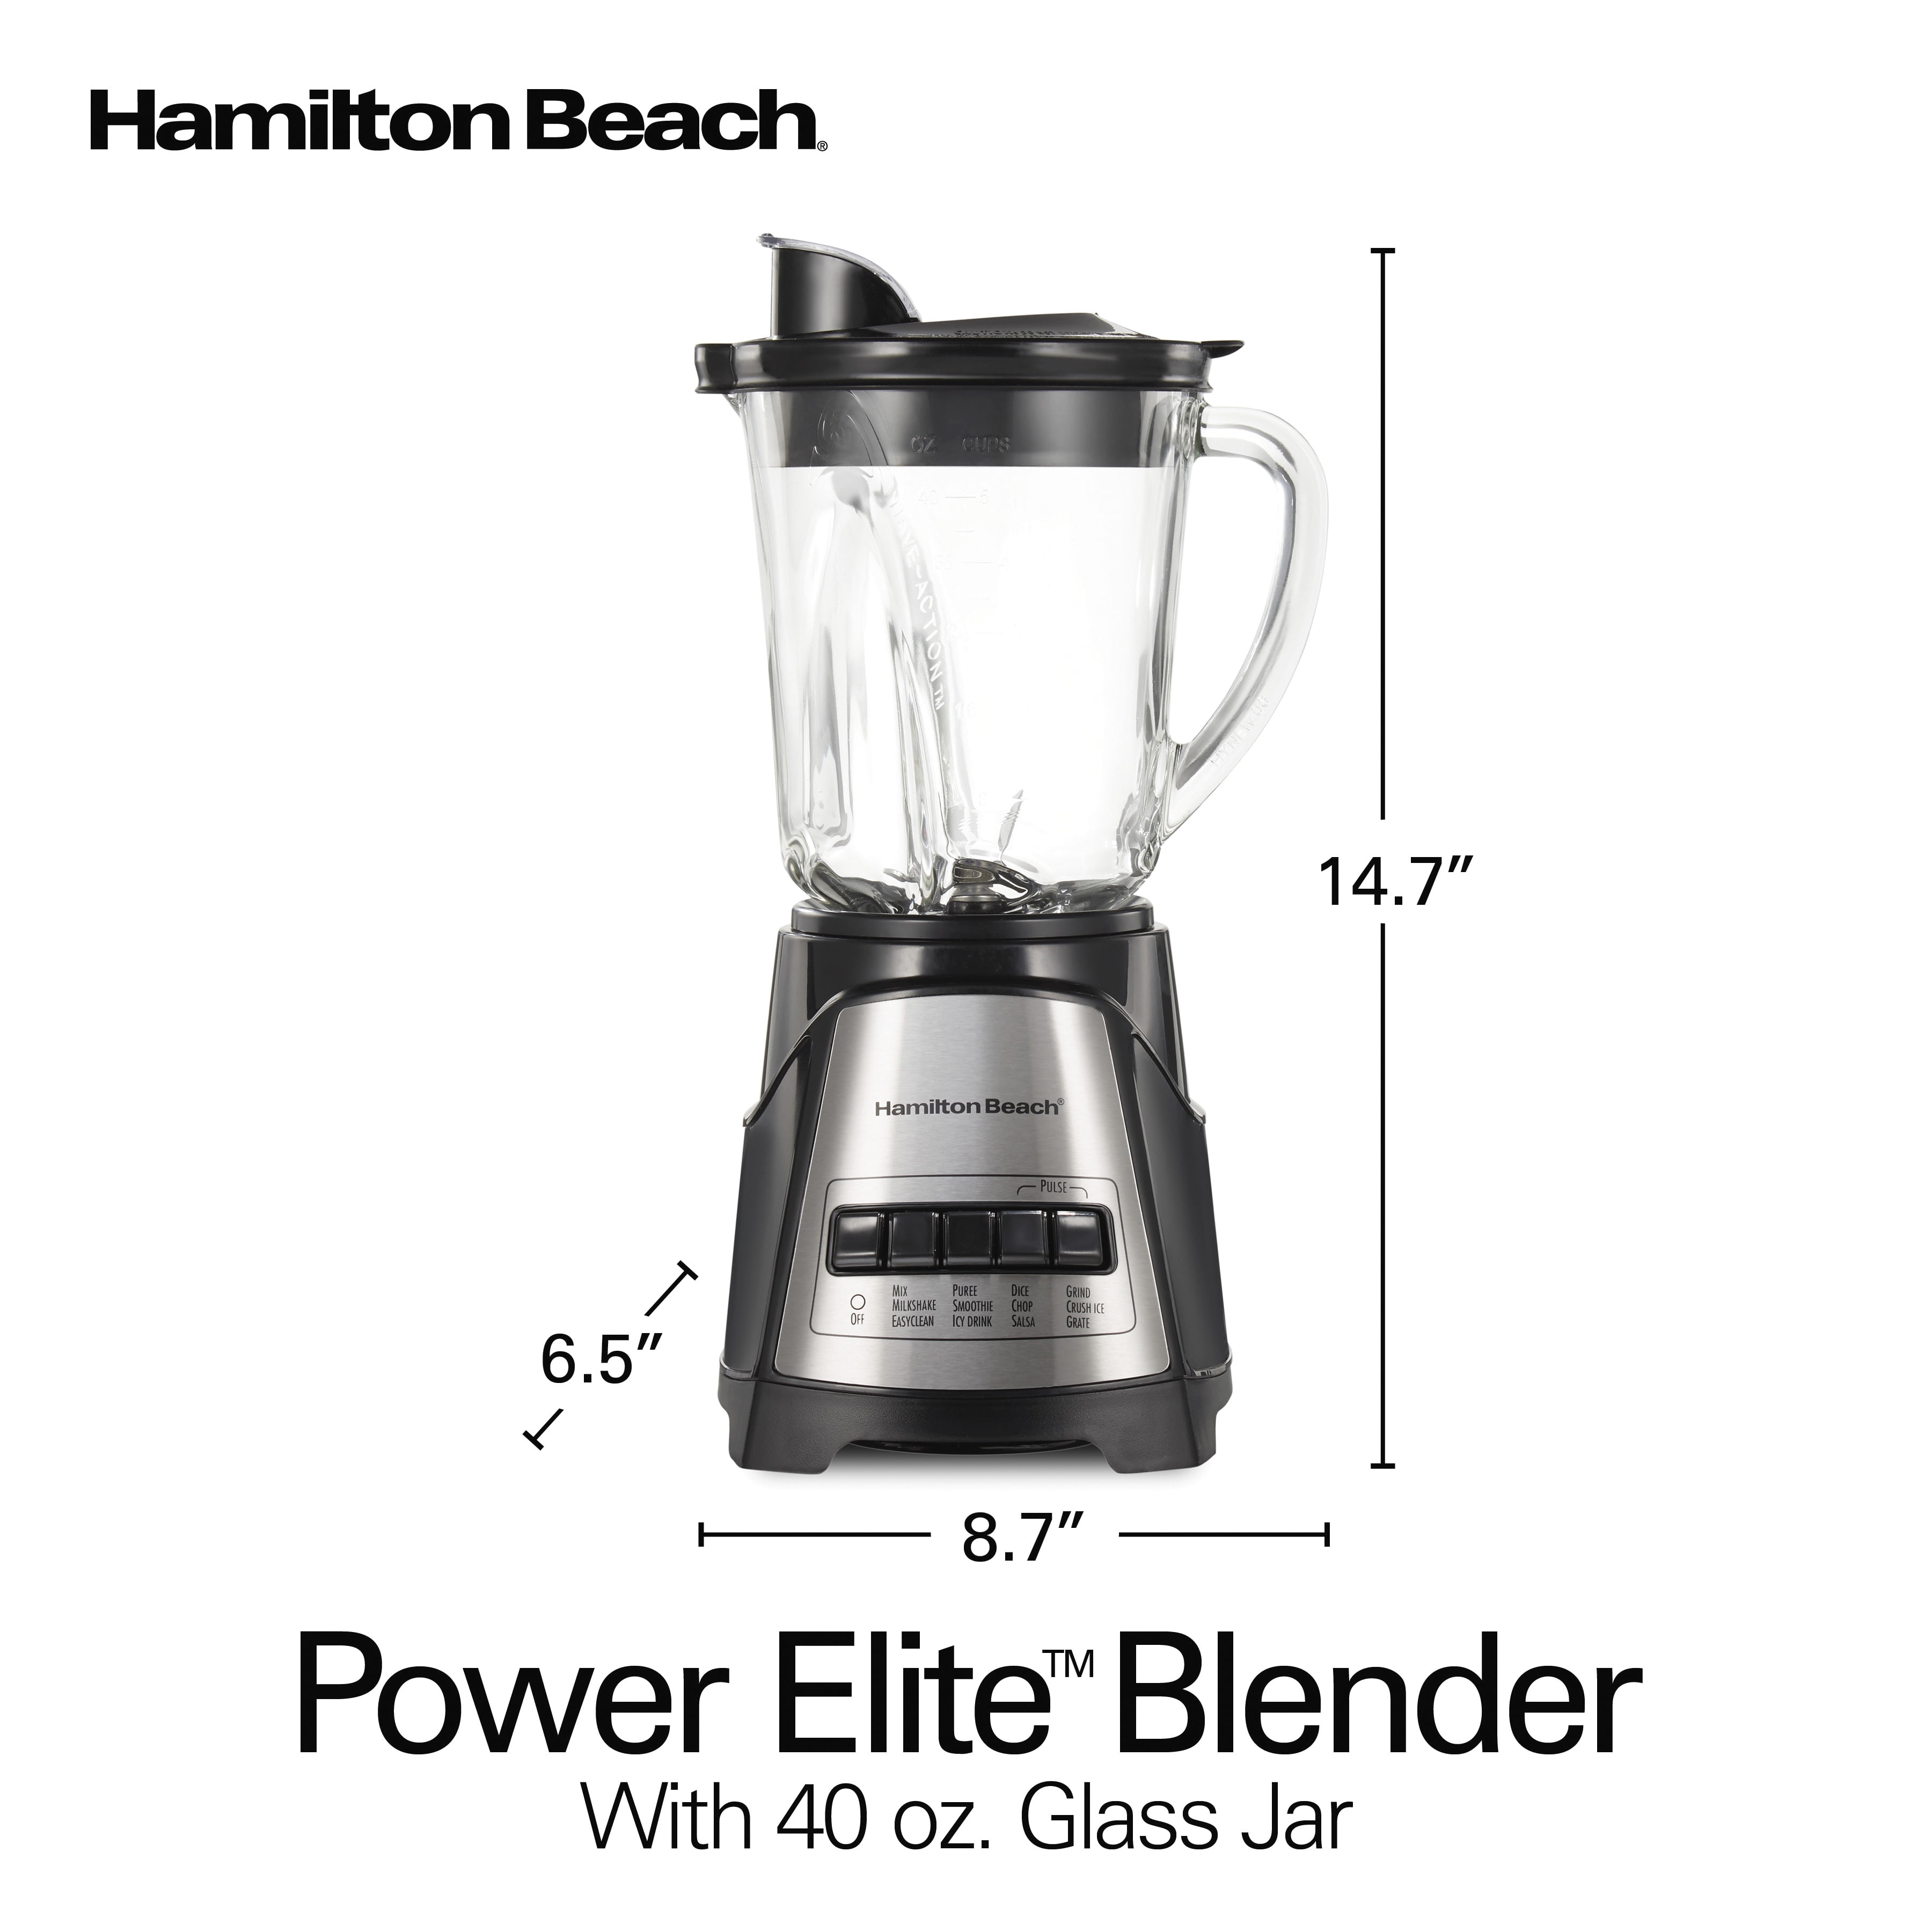 Hamilton Beach Power Elite Multi Function Blender unboxing and